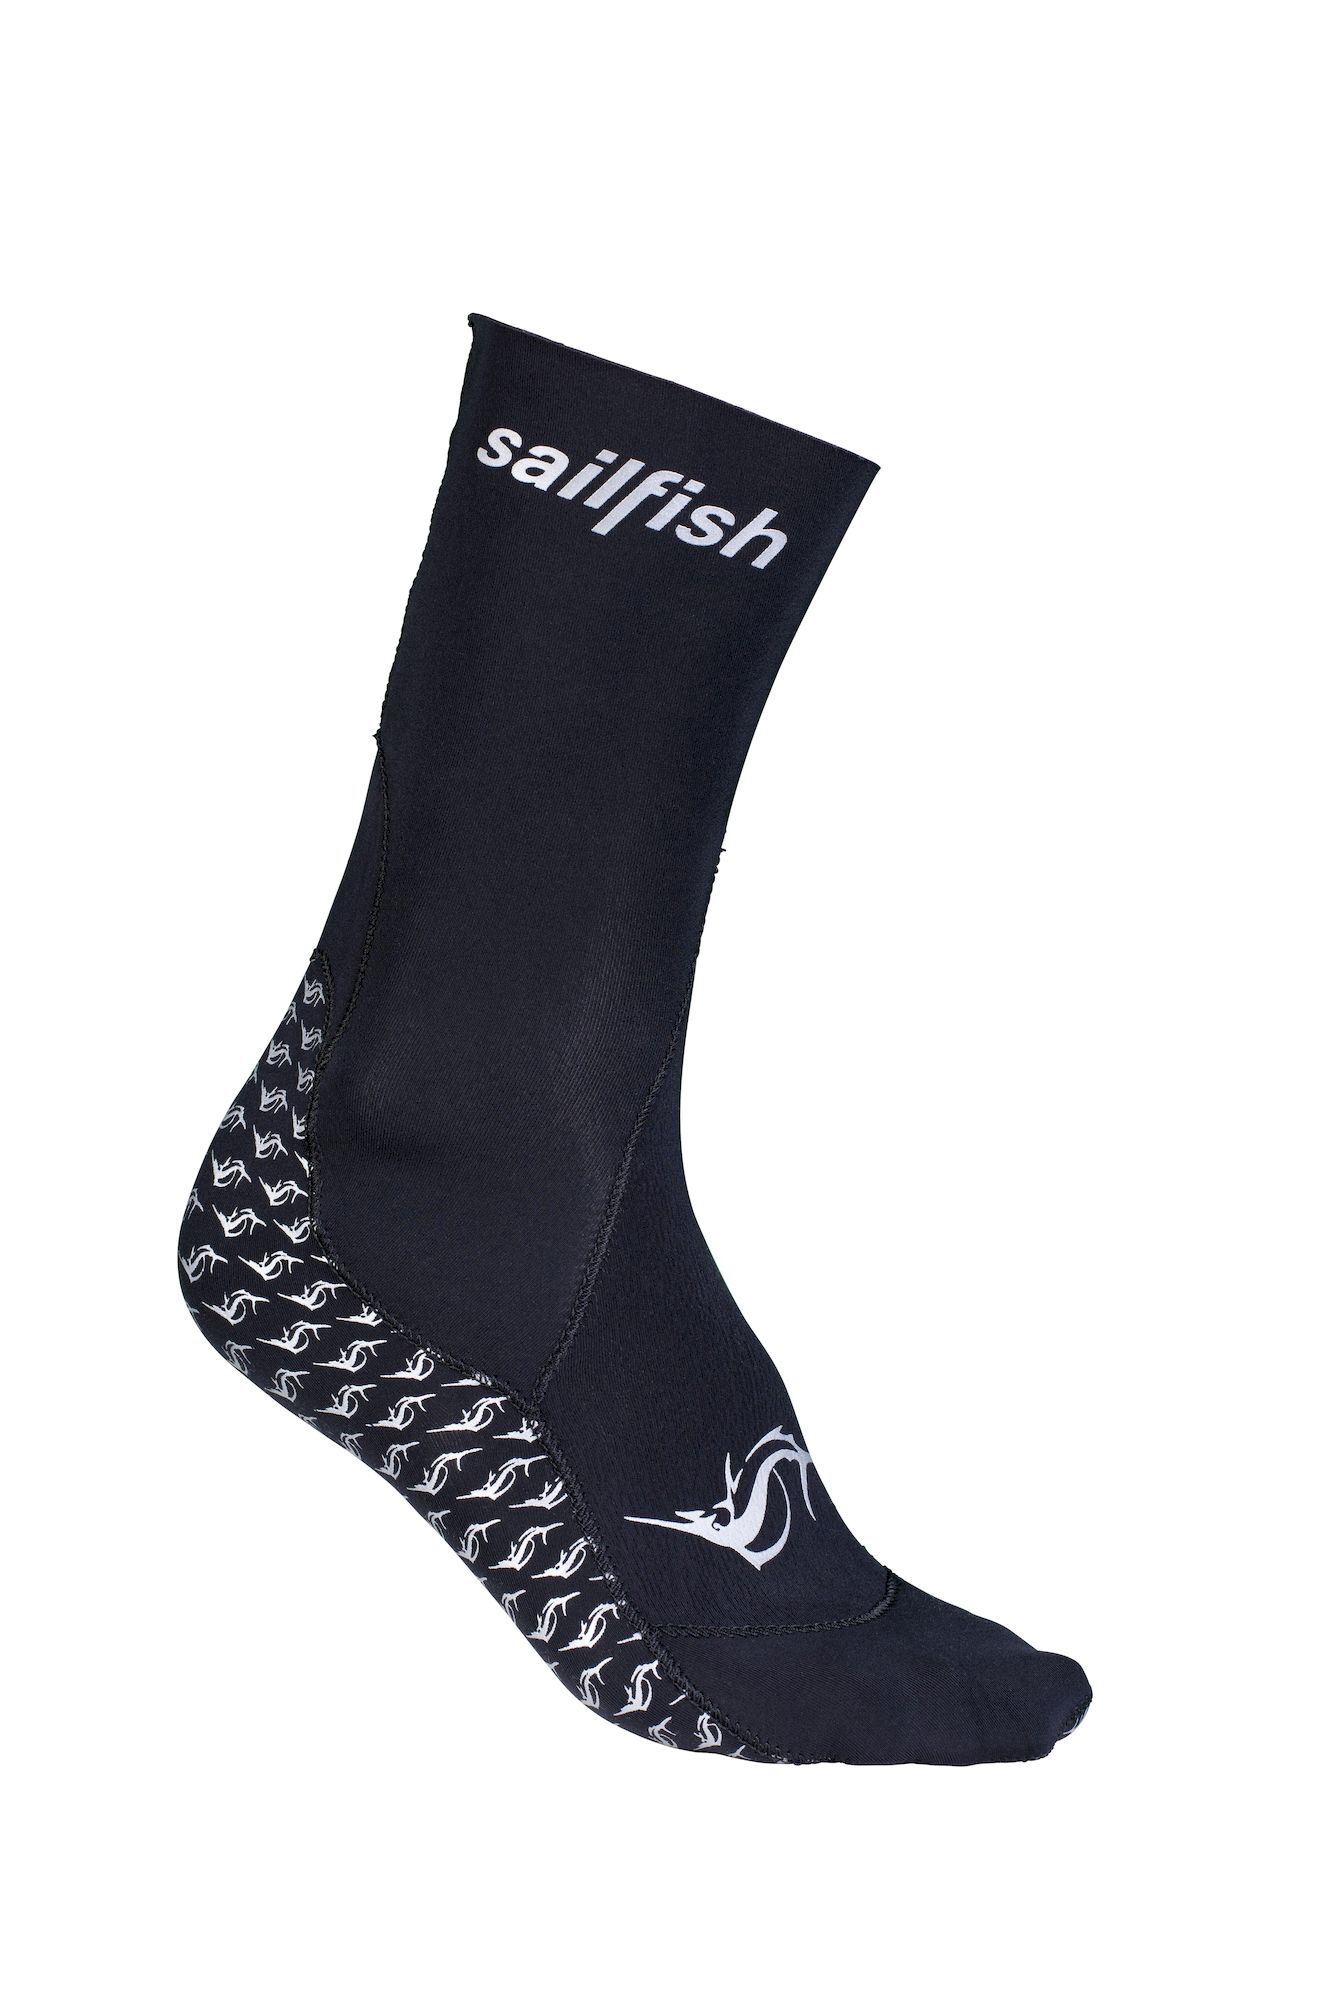 Sailfish Neoprene Socks - Calcetines neopreno | Hardloop